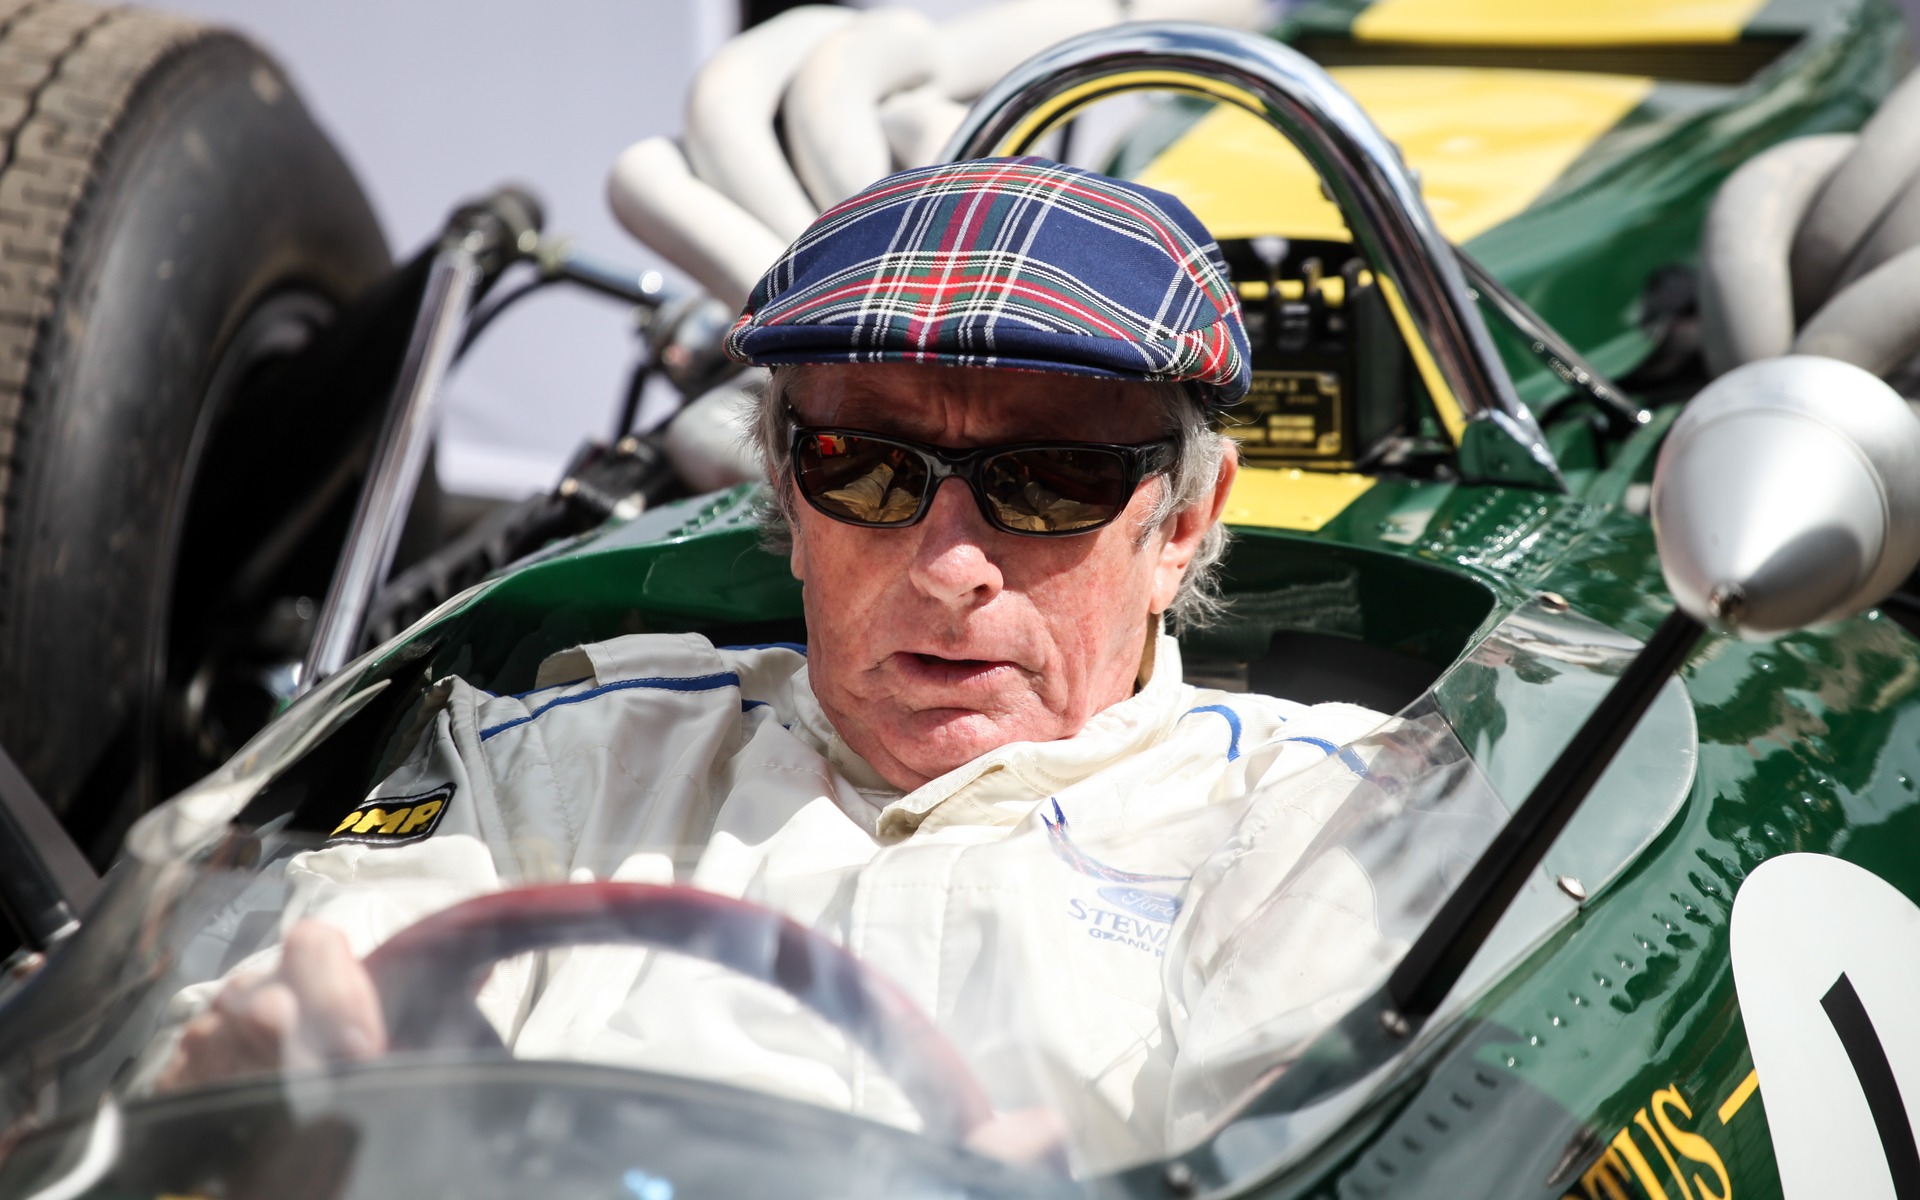 Sir Jackie Stewart, three-time F1 World Champion driving a Lotus-BRM